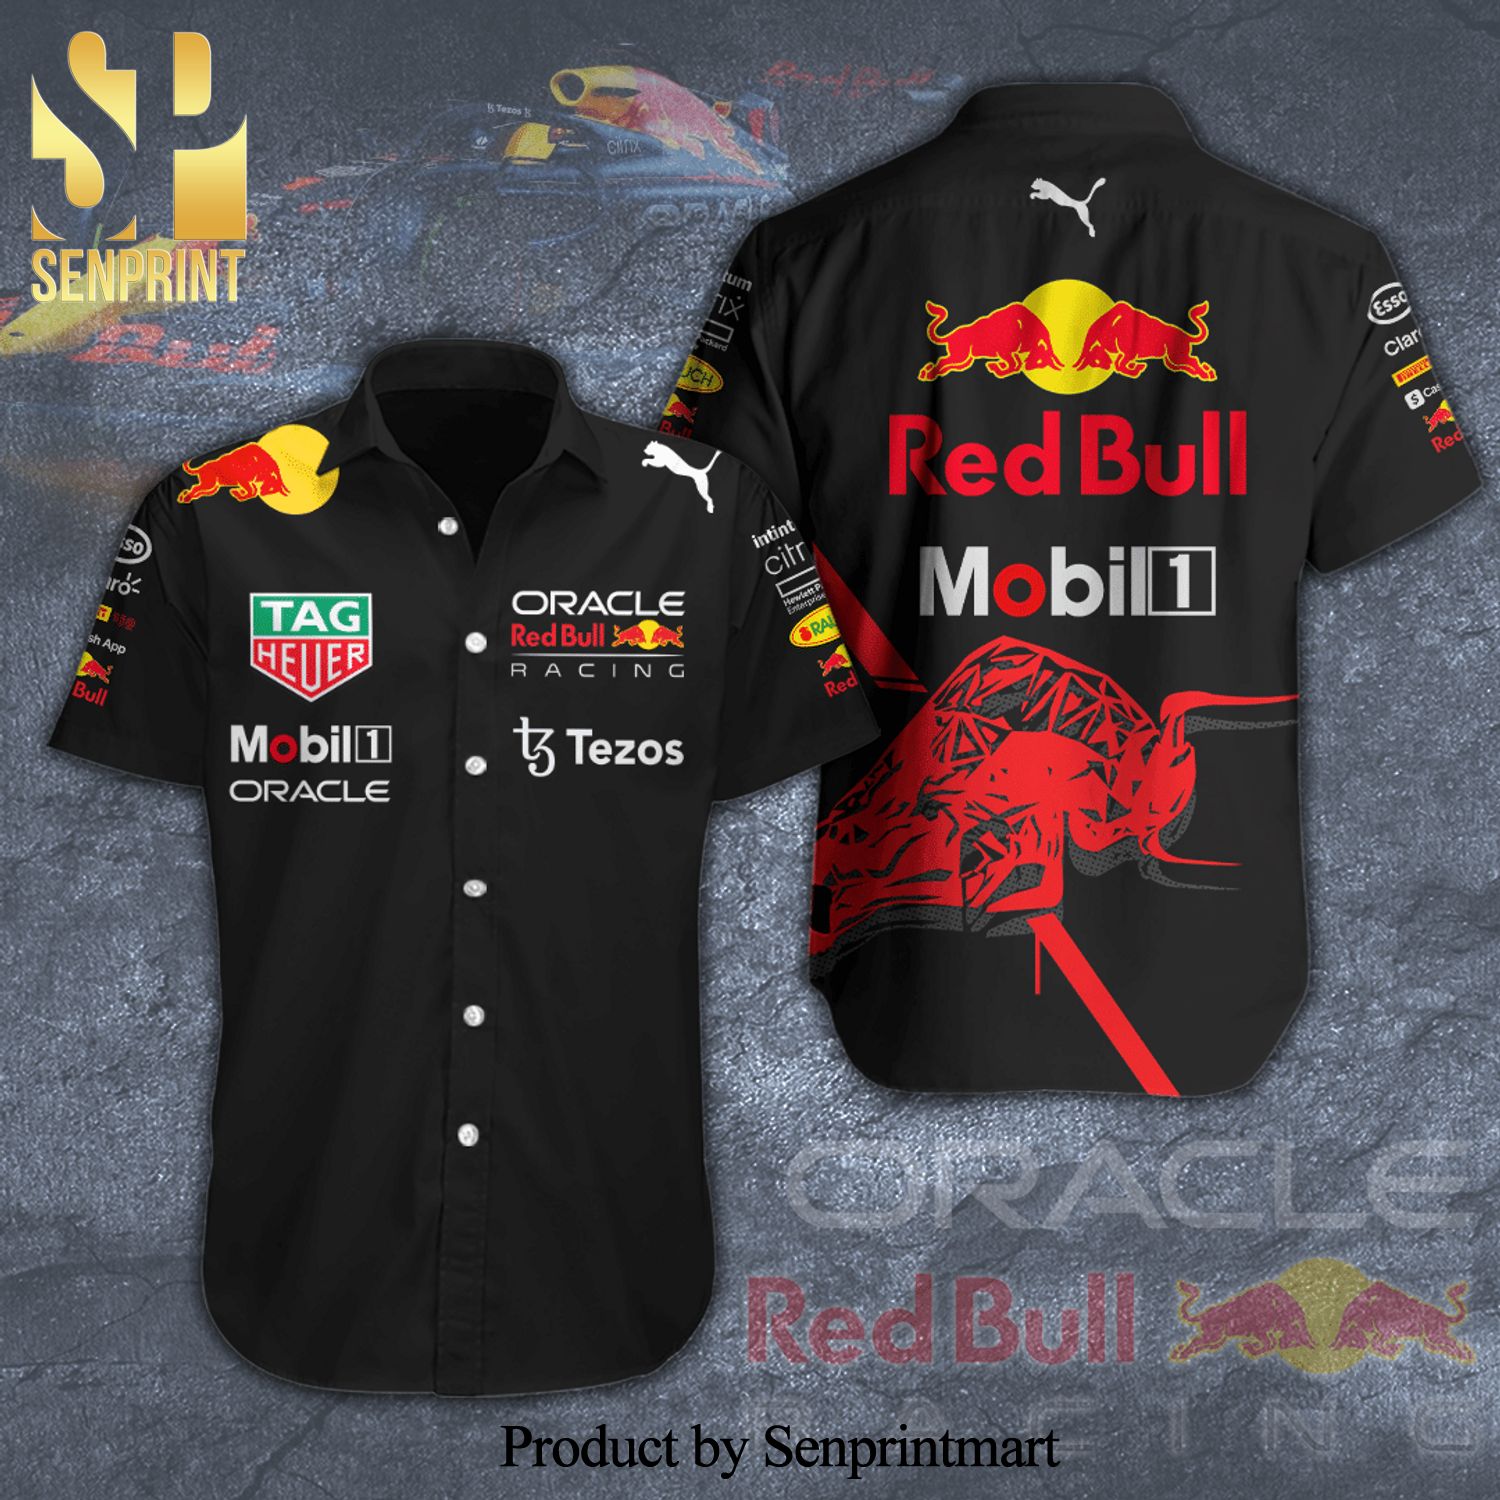 Red Bull Racing Tezos Mobil 1 Oracle Full Printing Short Sleeve Dress Shirt Hawaiian Summer Aloha Beach Shirt – Black White Navy Gray